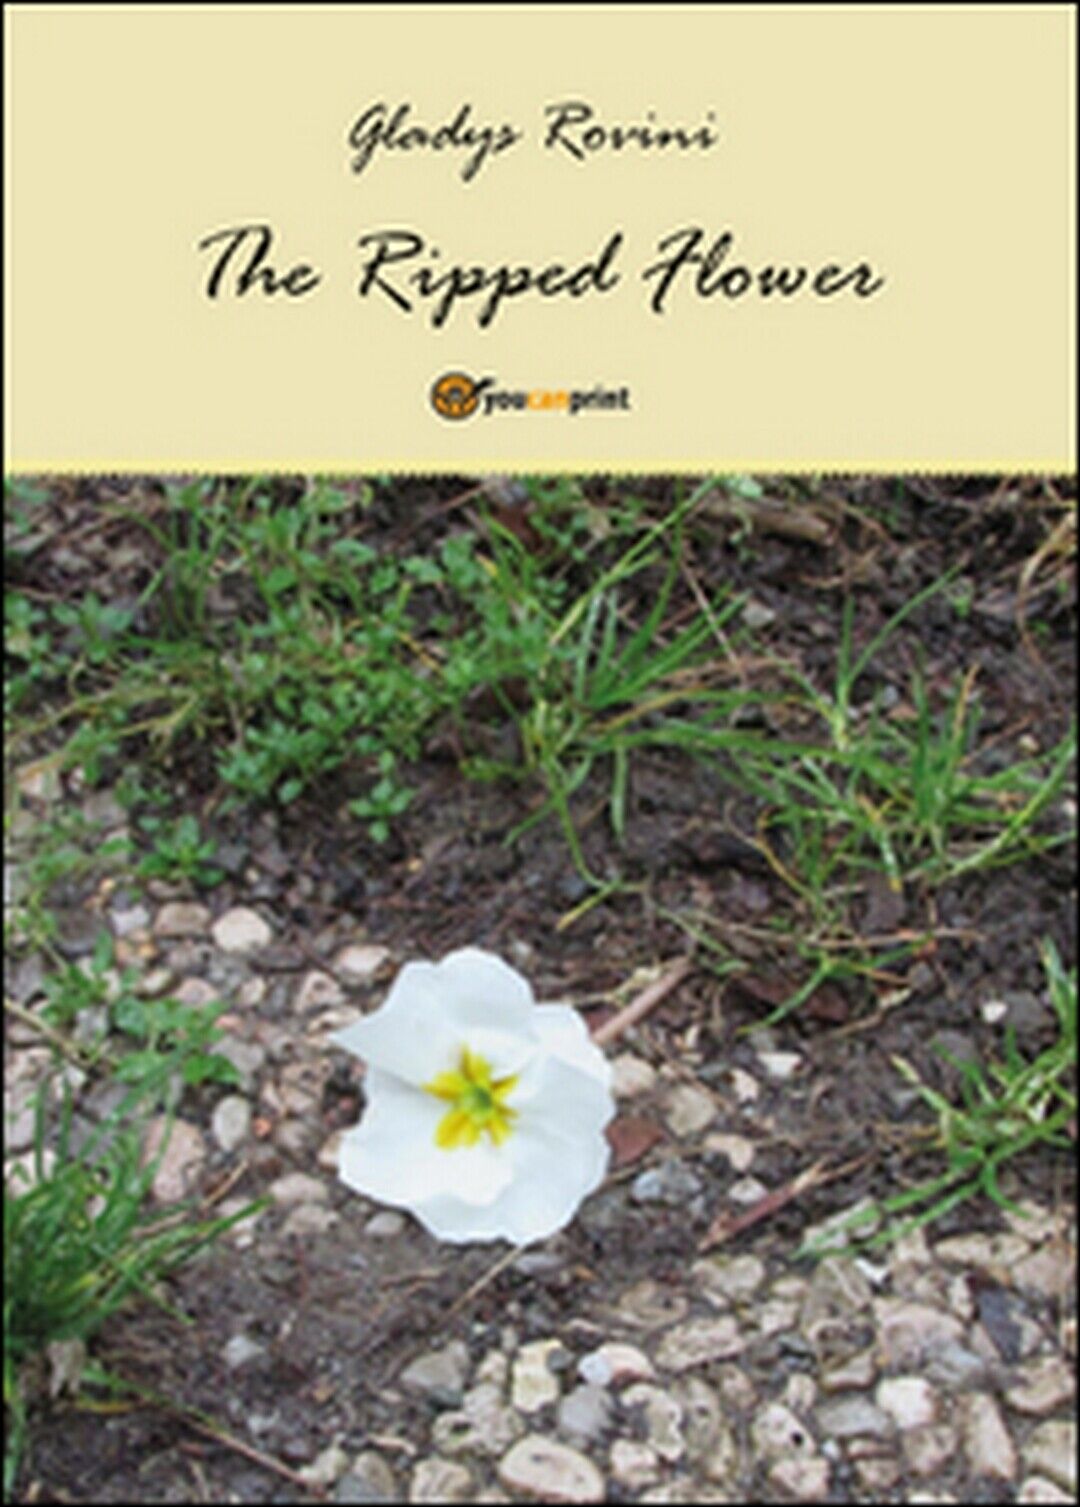 The ripped flower. Ediz. italiana  di Gladys Rovini,  2015,  Youcanprint